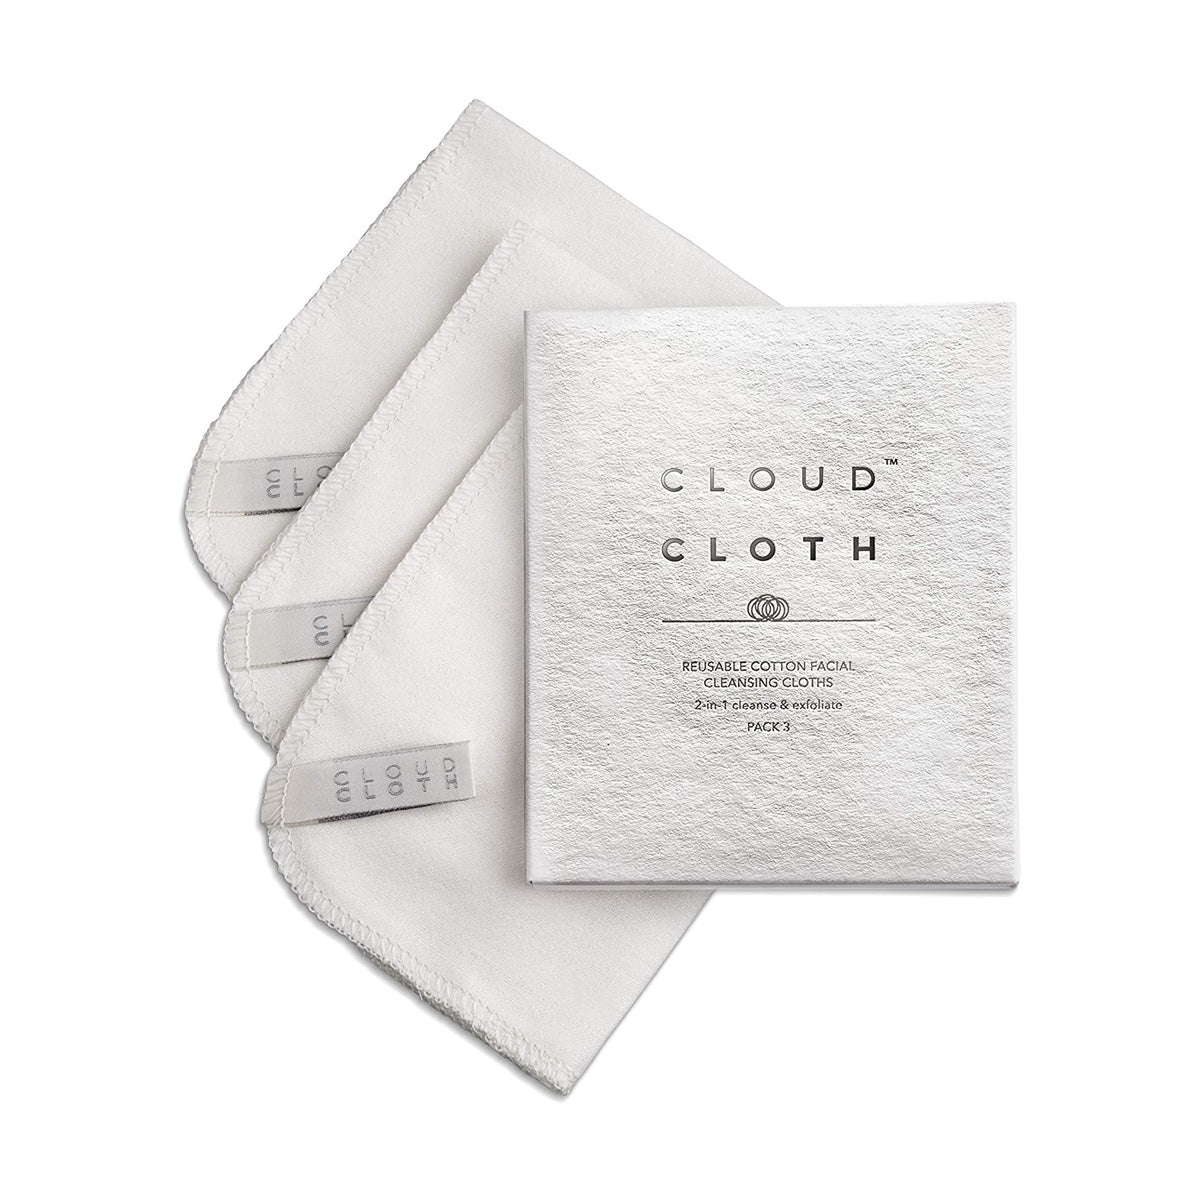 CloudCloth Reusable Facial Cloth Wipes